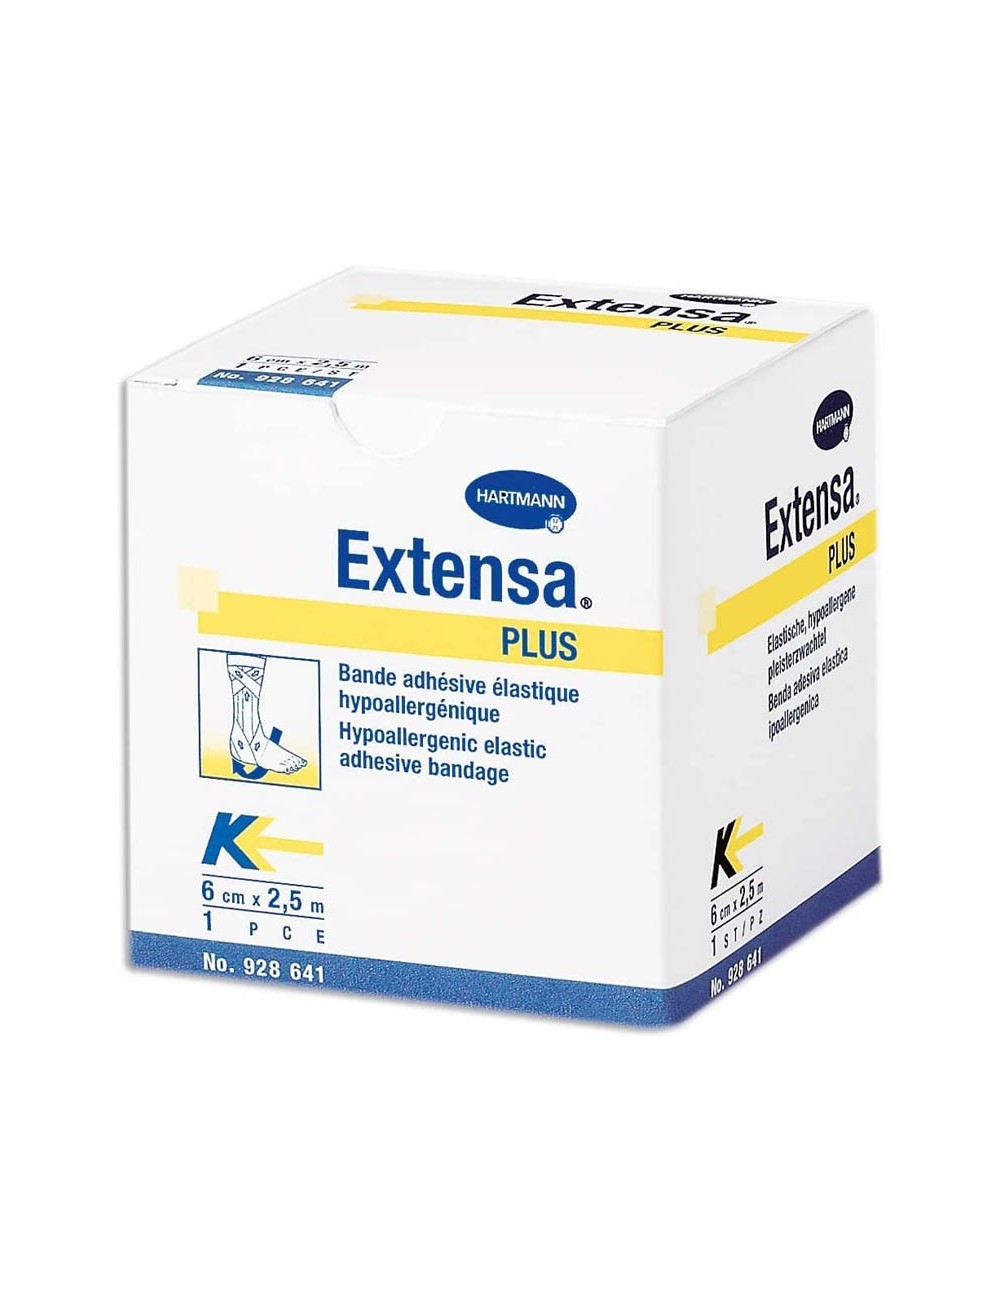 BANDE ADHESIVE EXTENSIBLE EXTENSA PLUS 2,5M X 3CM (X60)